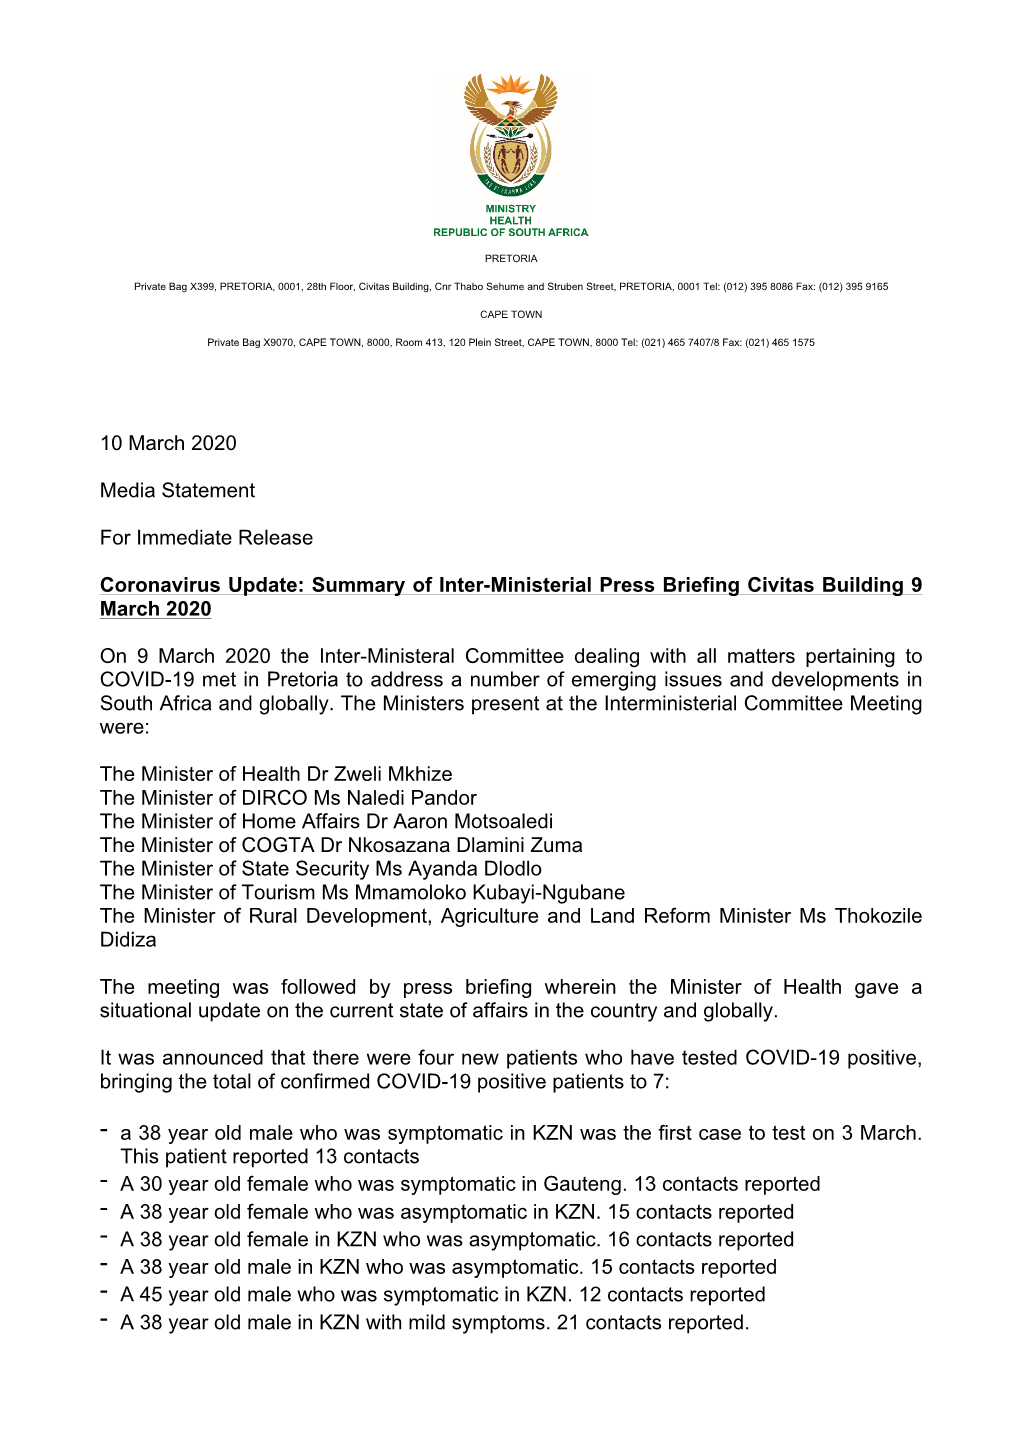 Coronavirus Update: Summary of Inter-Ministerial Press Briefing Civitas Building 9 March 2020